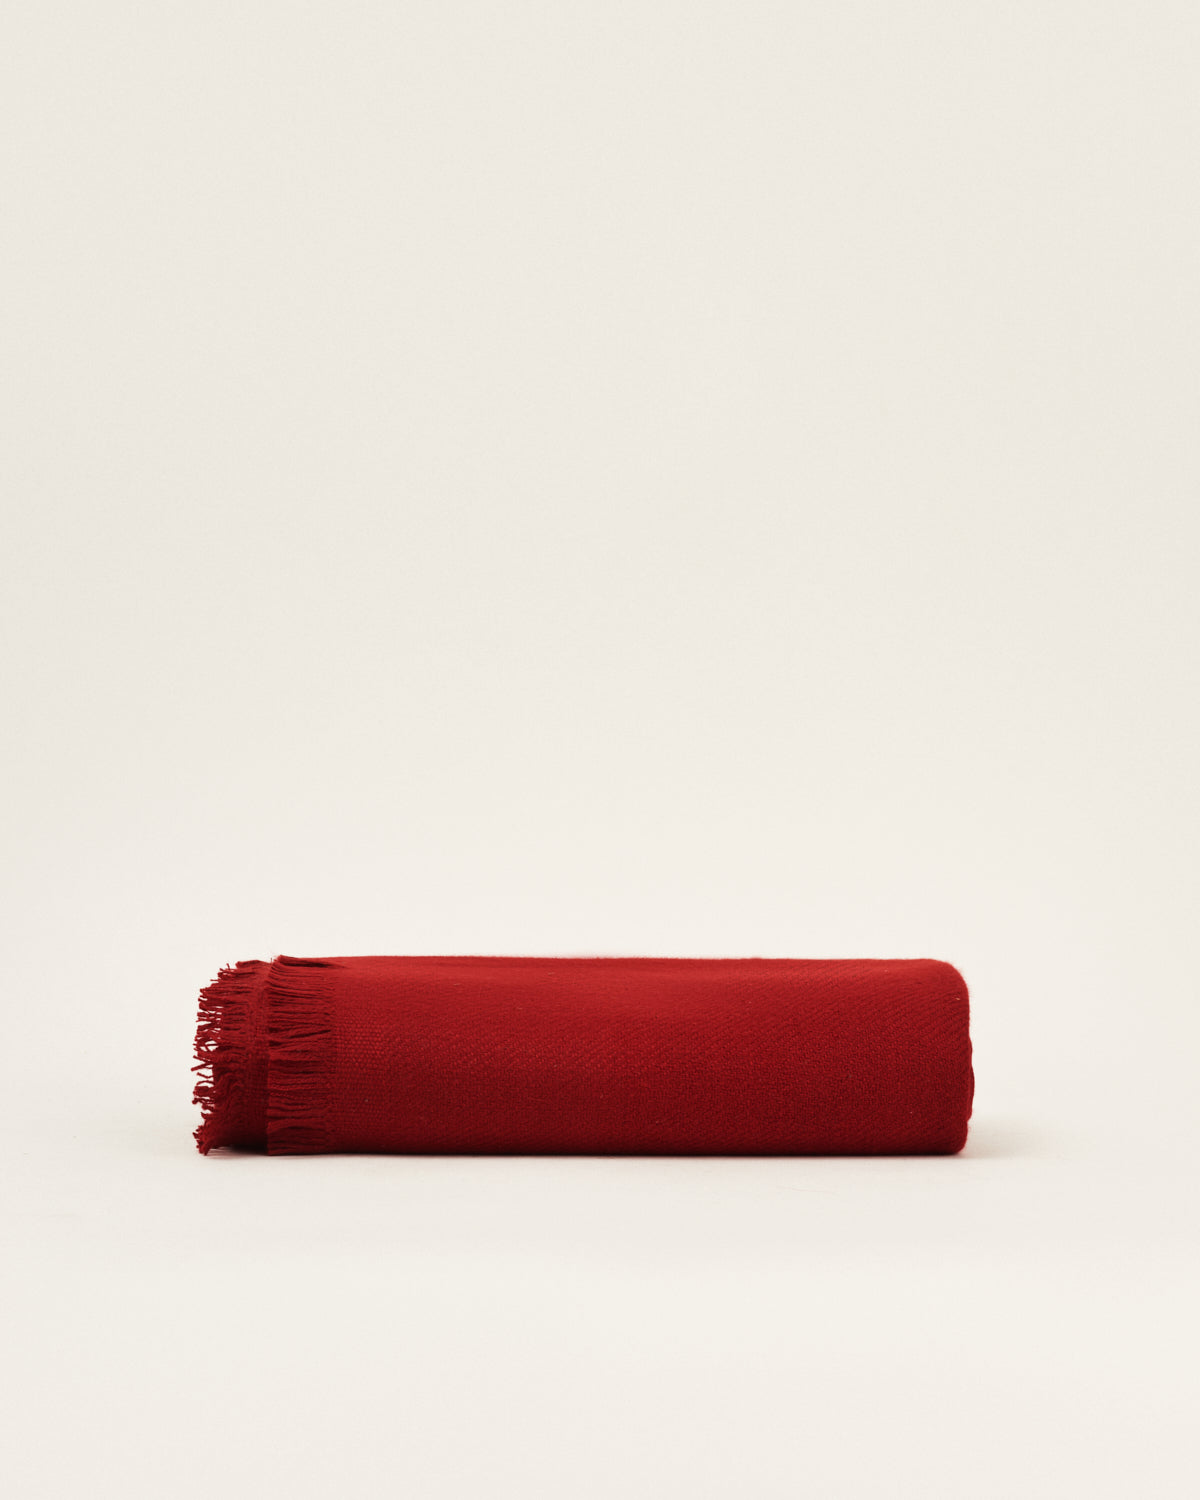 Red cashmere blanket